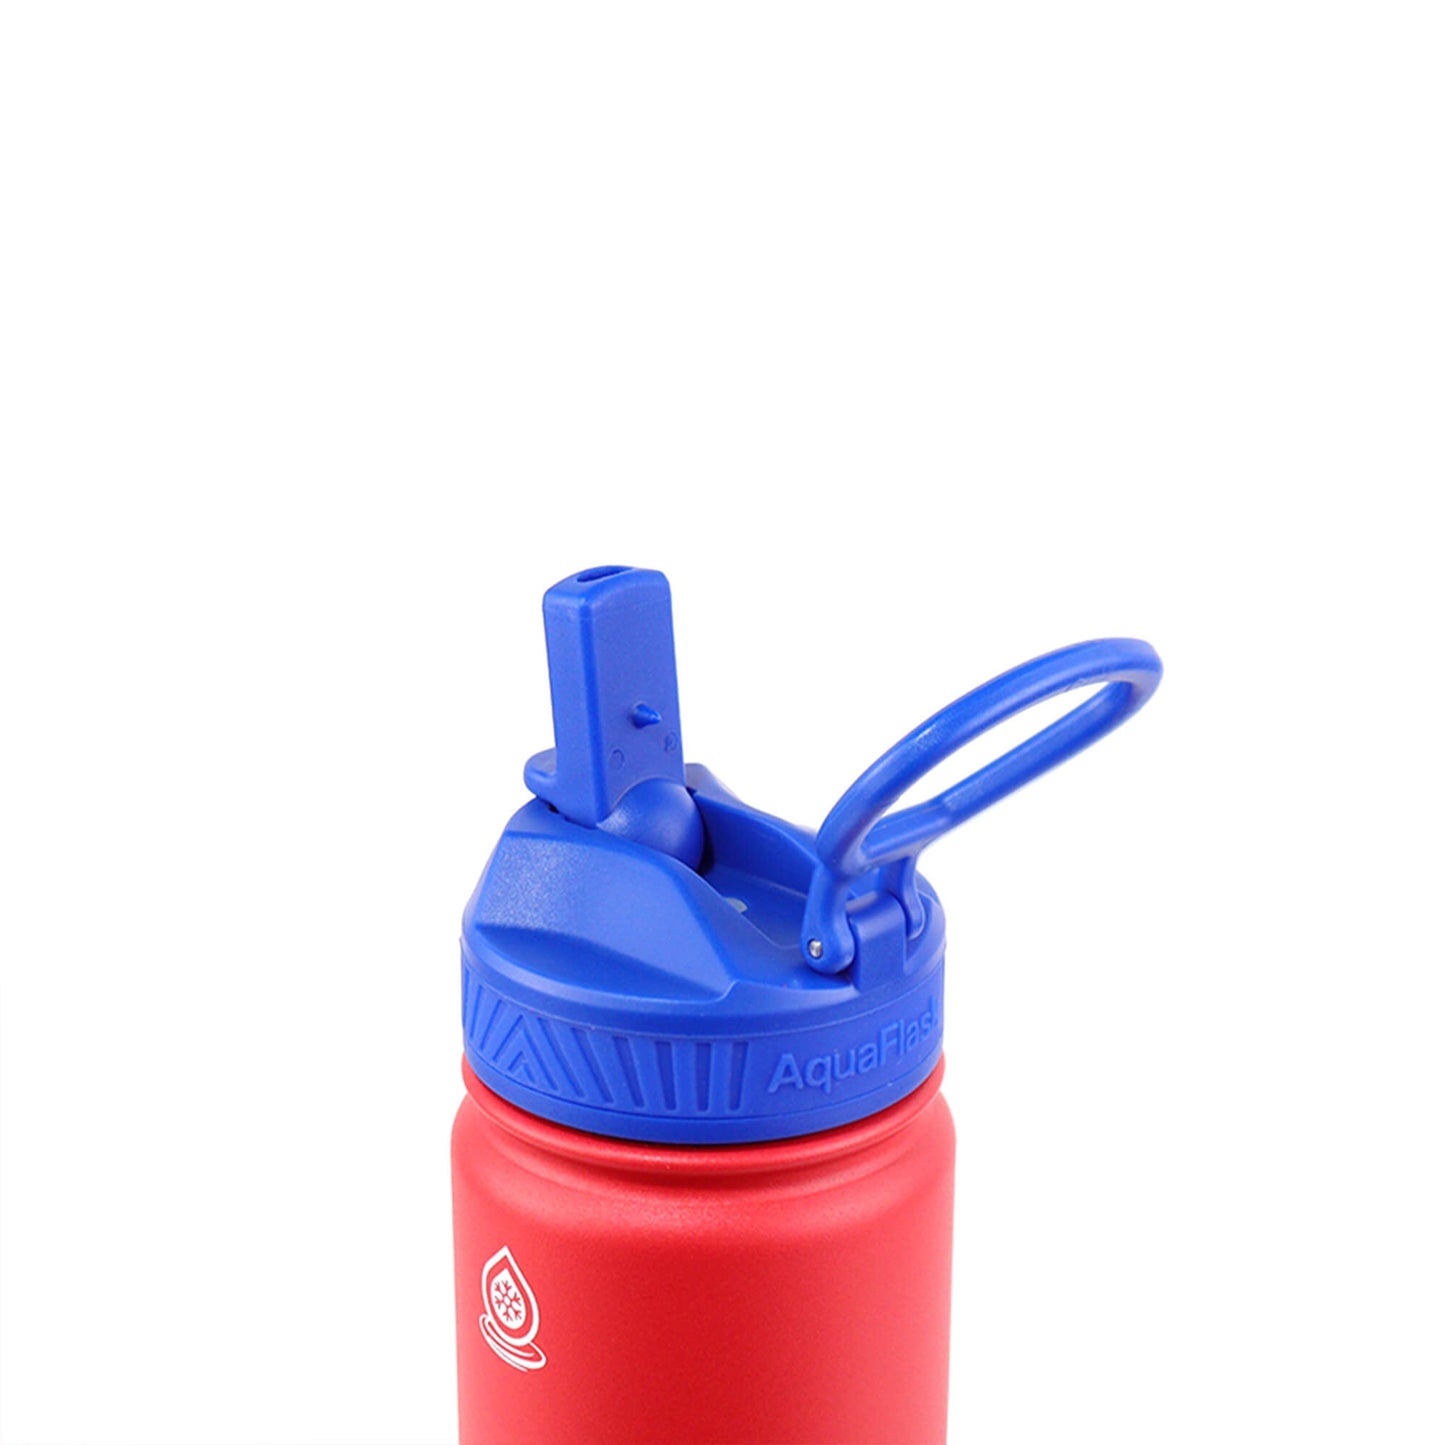 Aquaflask Kids I Vacuum Insulated Water Bottle 530ml (18oz)